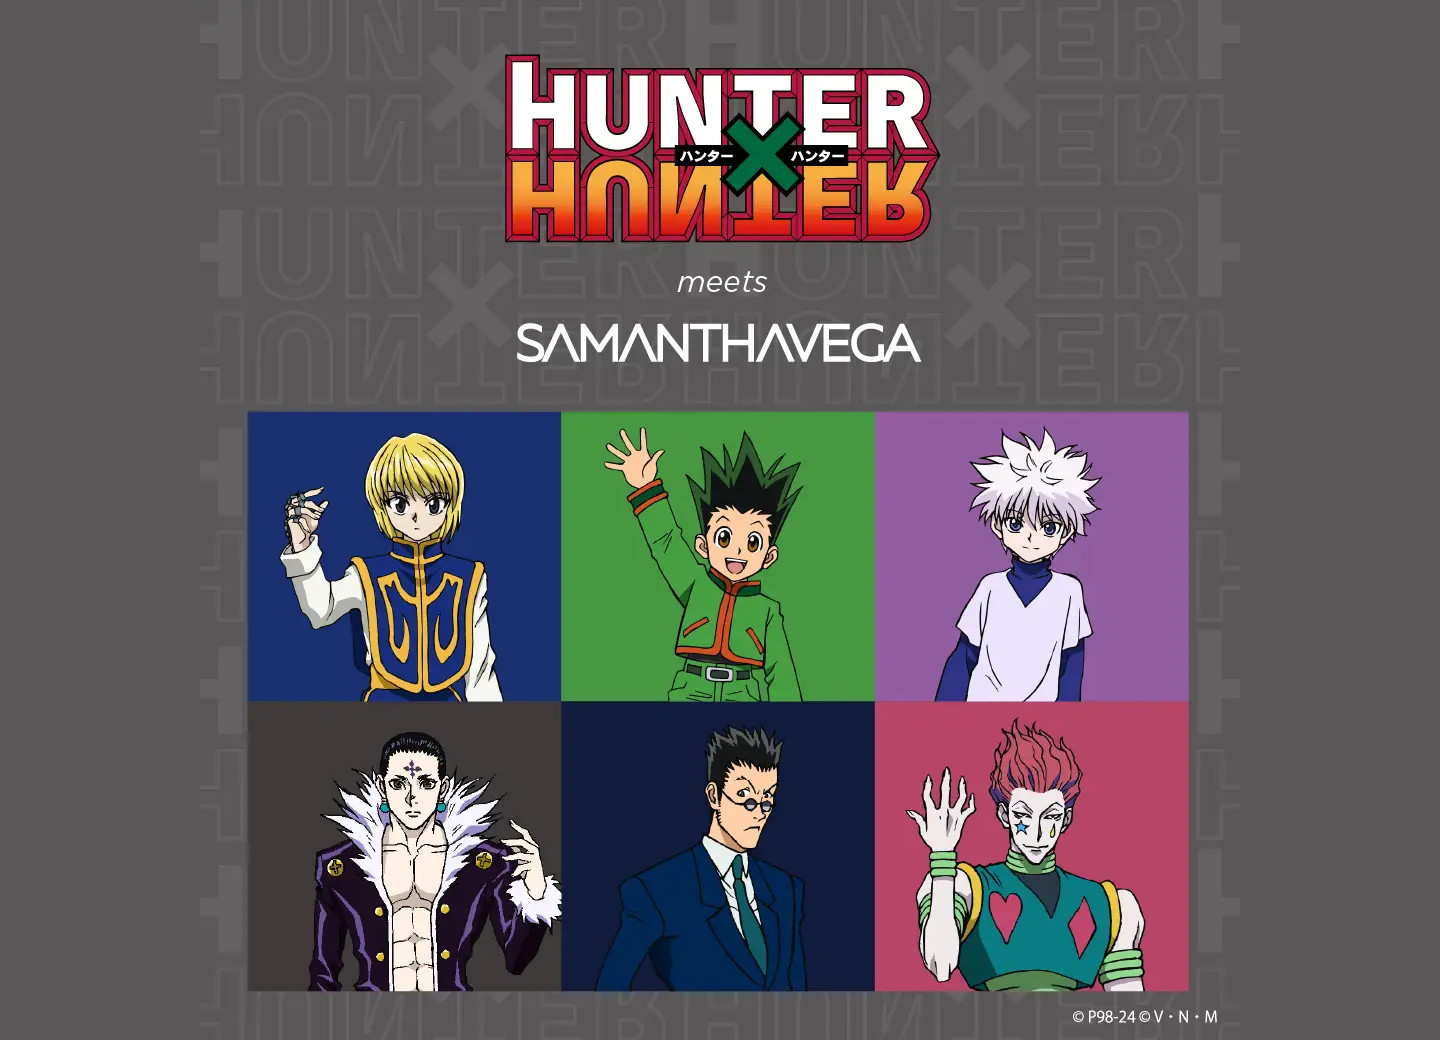 Yoshihiro Togashi's Hunter x Hunter manga returns in November - Polygon